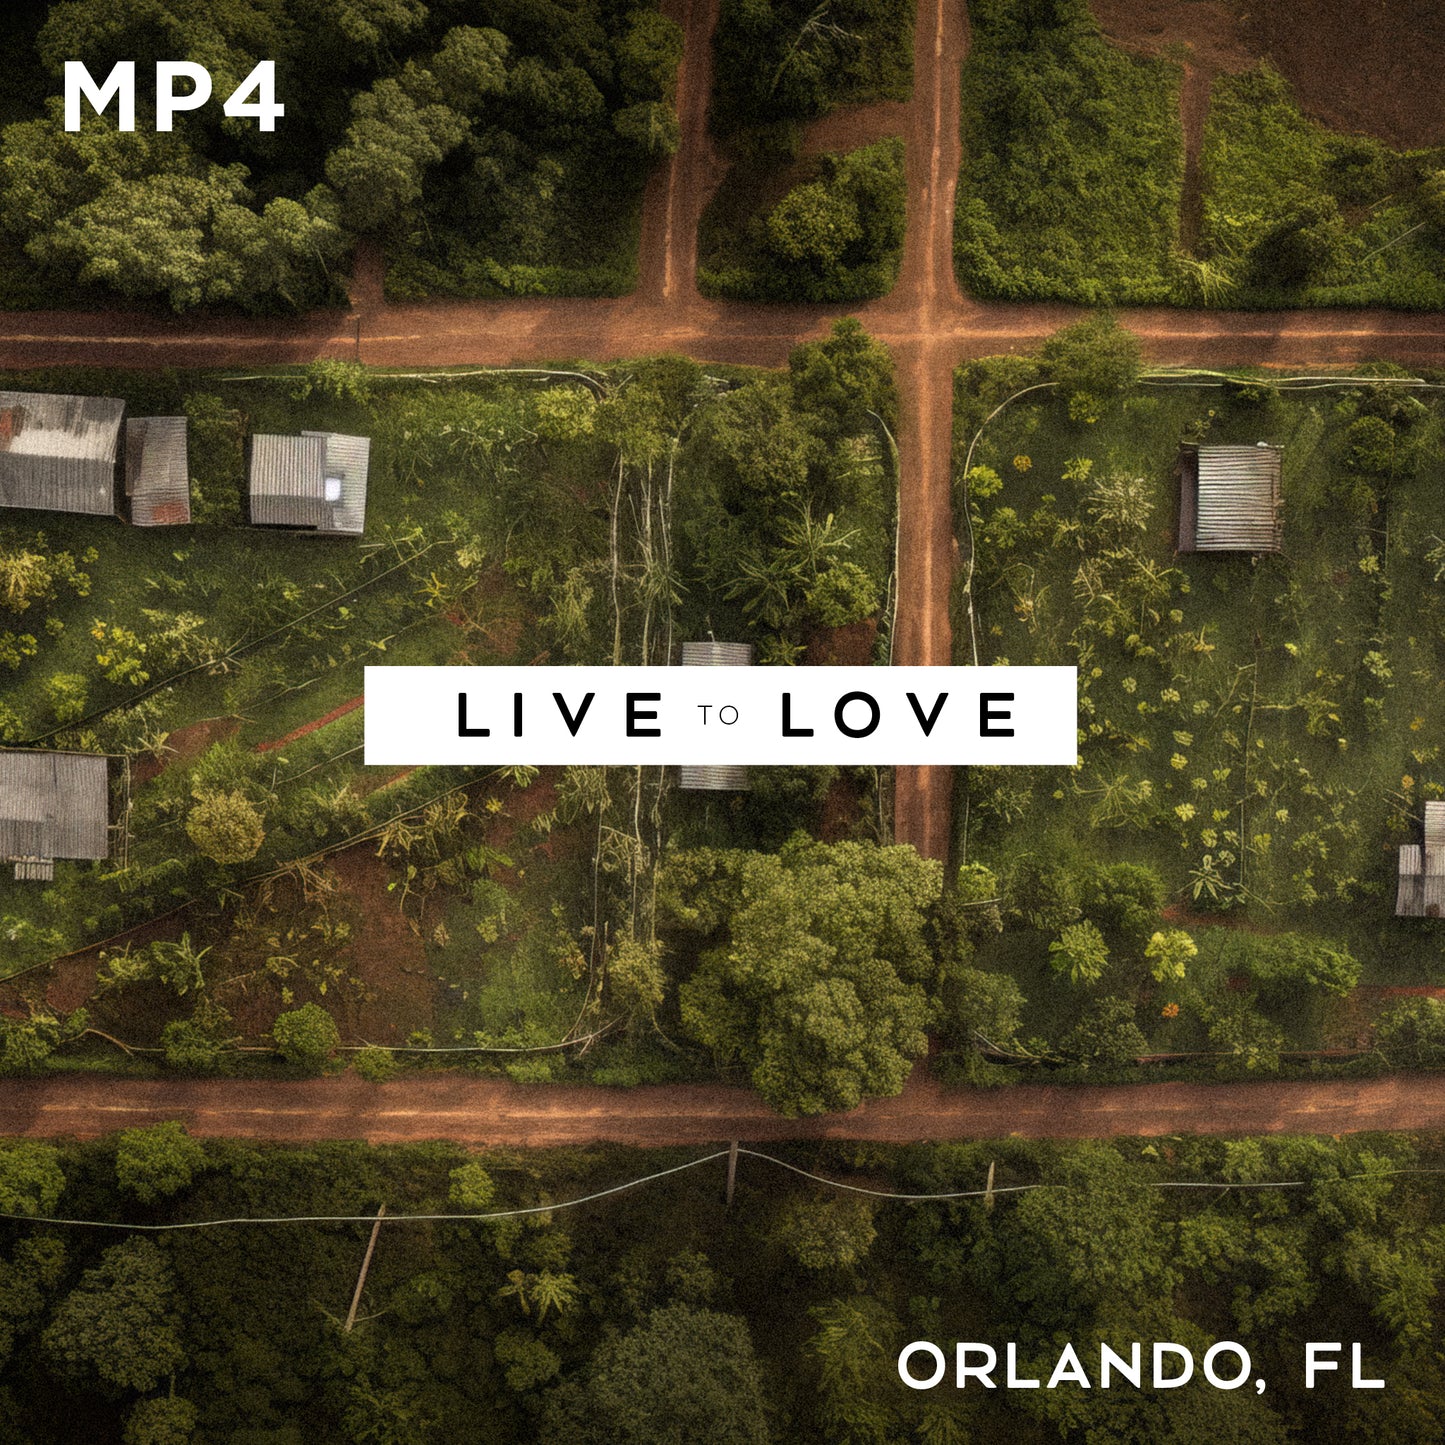 Live to Love: Orlando MP4s